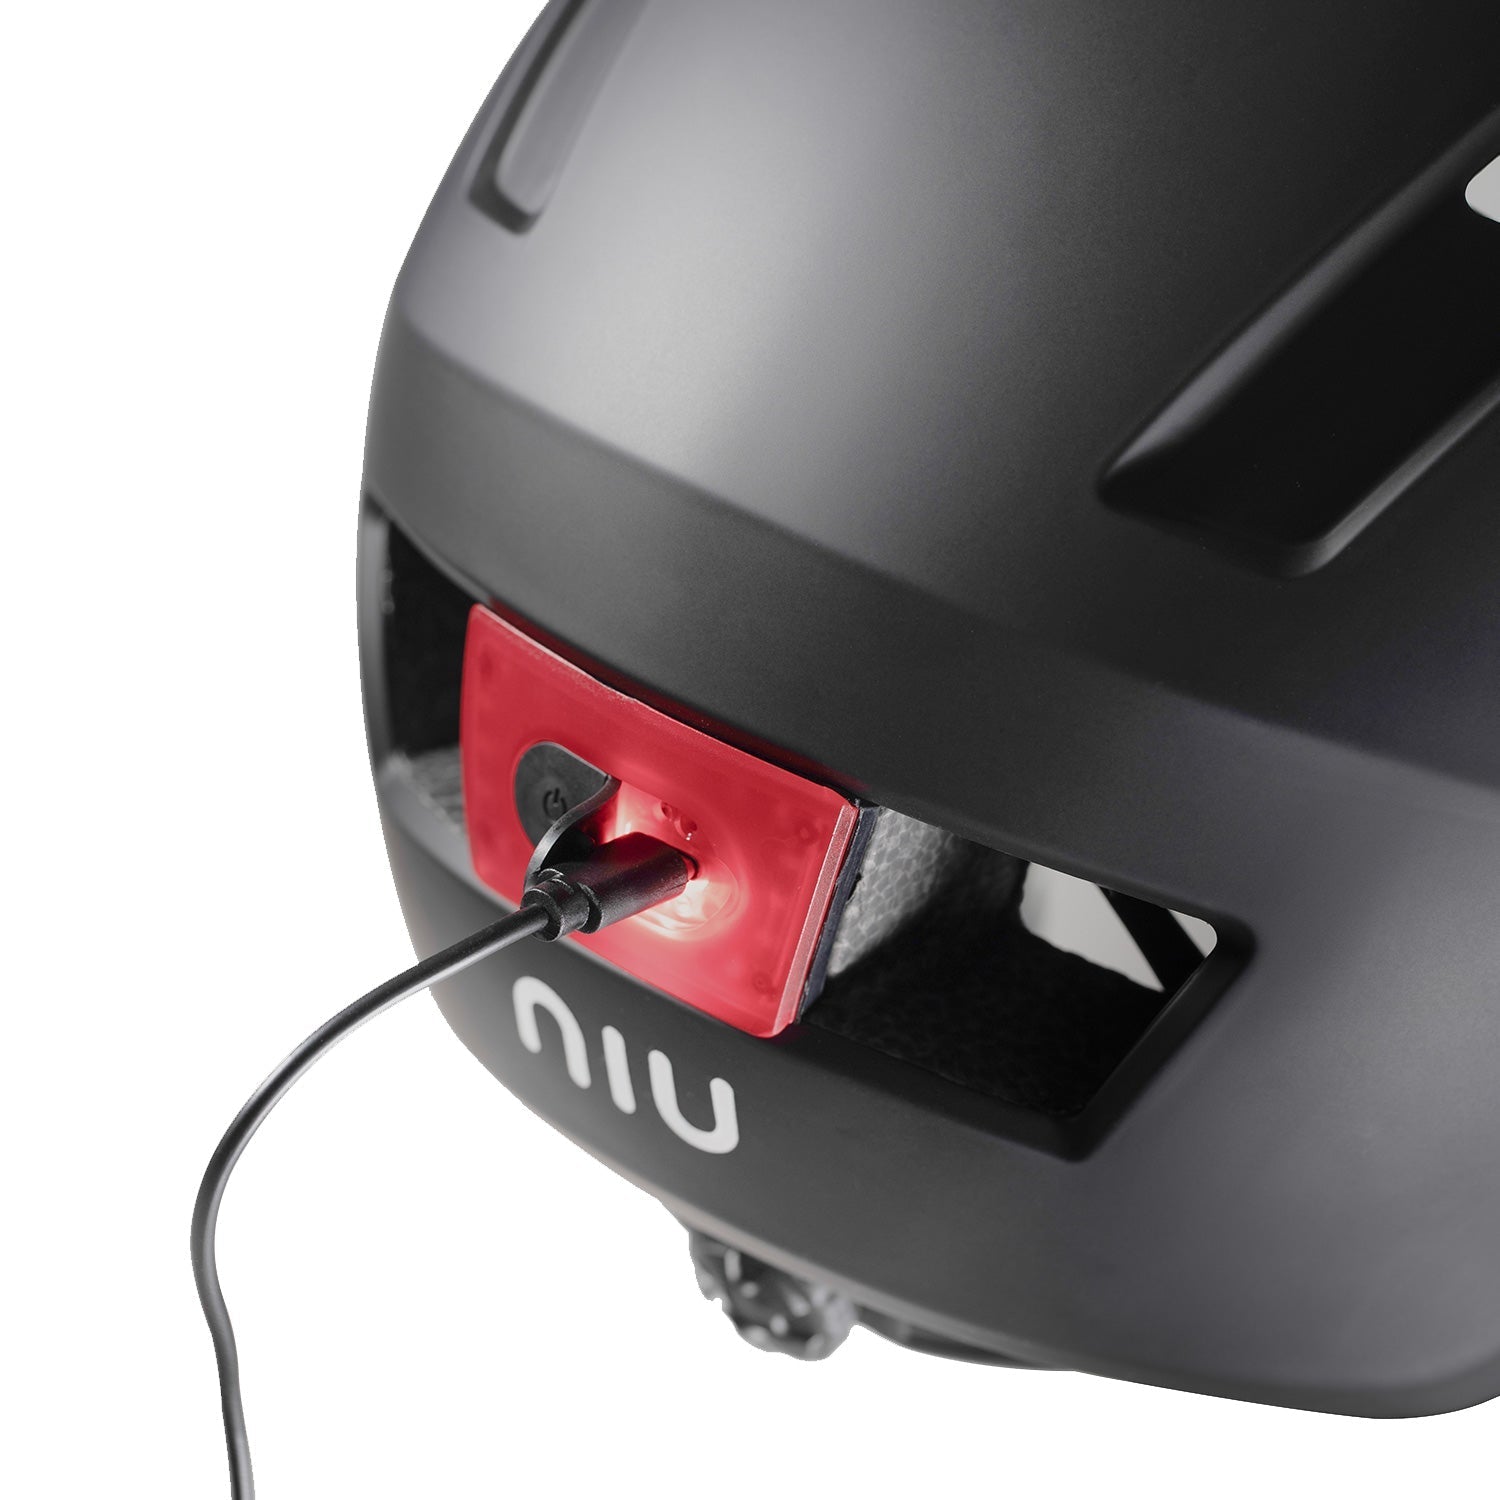 NIU Elektroroller Helm mit LED Licht